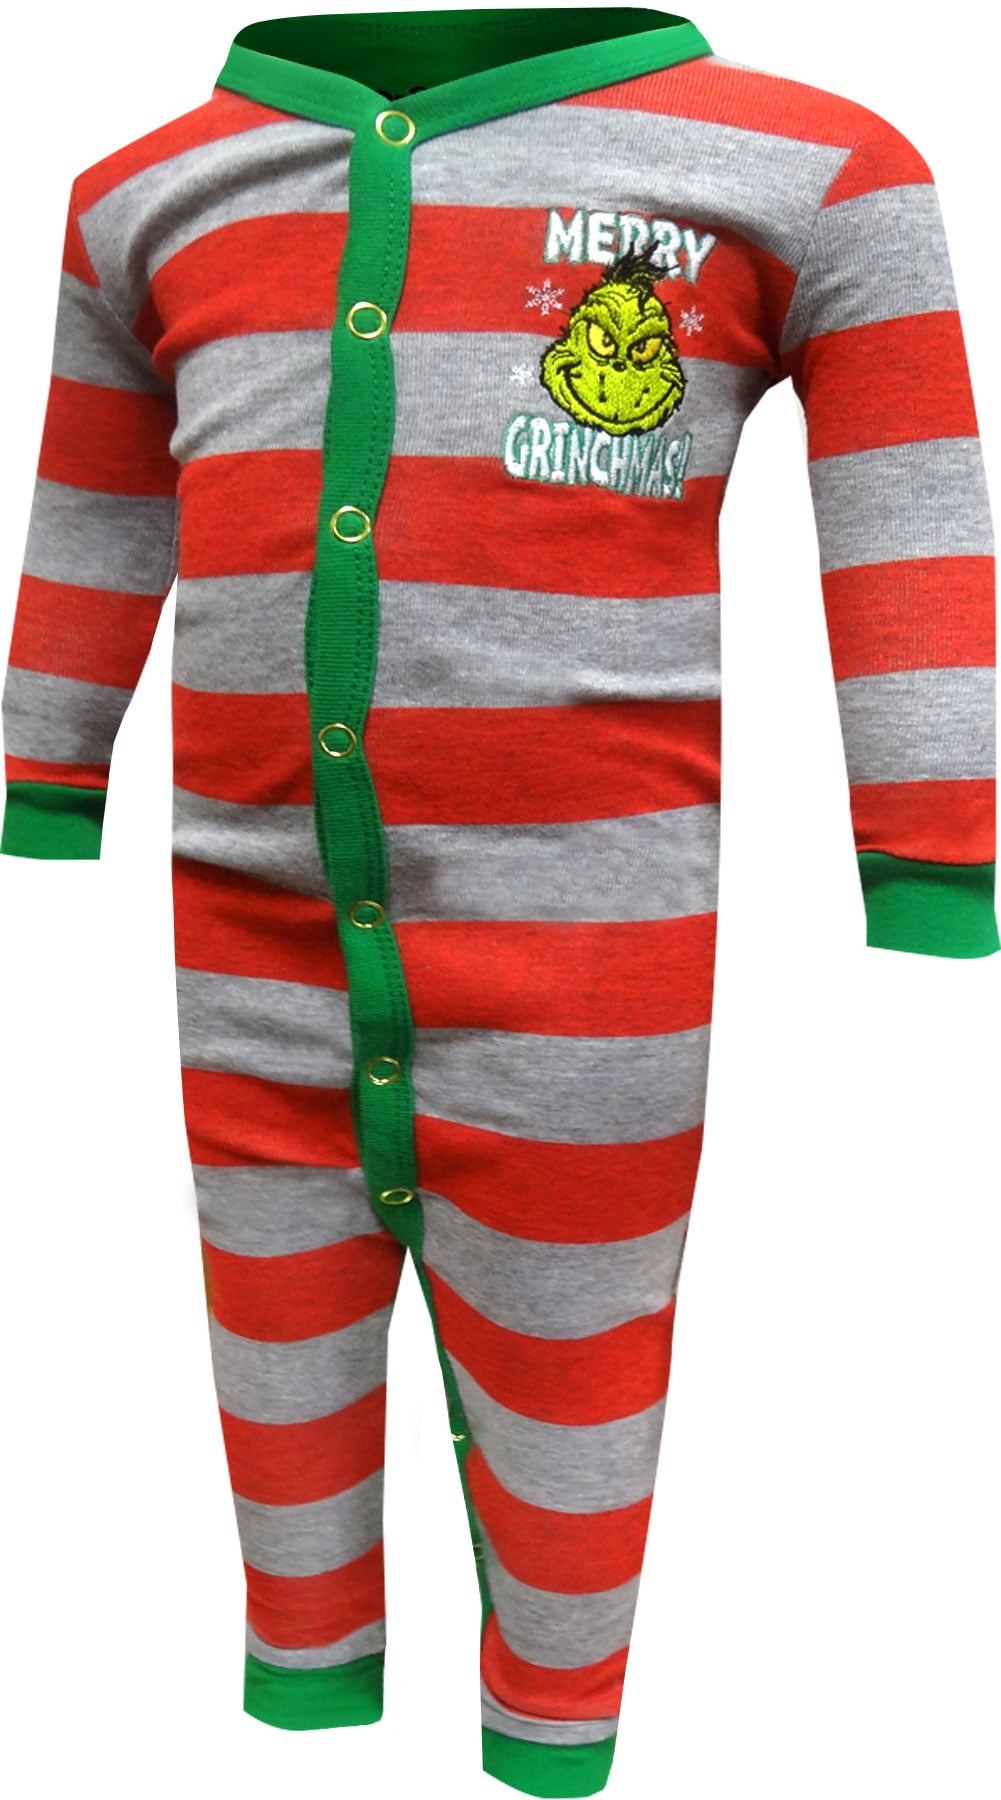 Grinch Pajamas Womens 2X Drop Seat Christmas union suit One Piece JumpSuit merry